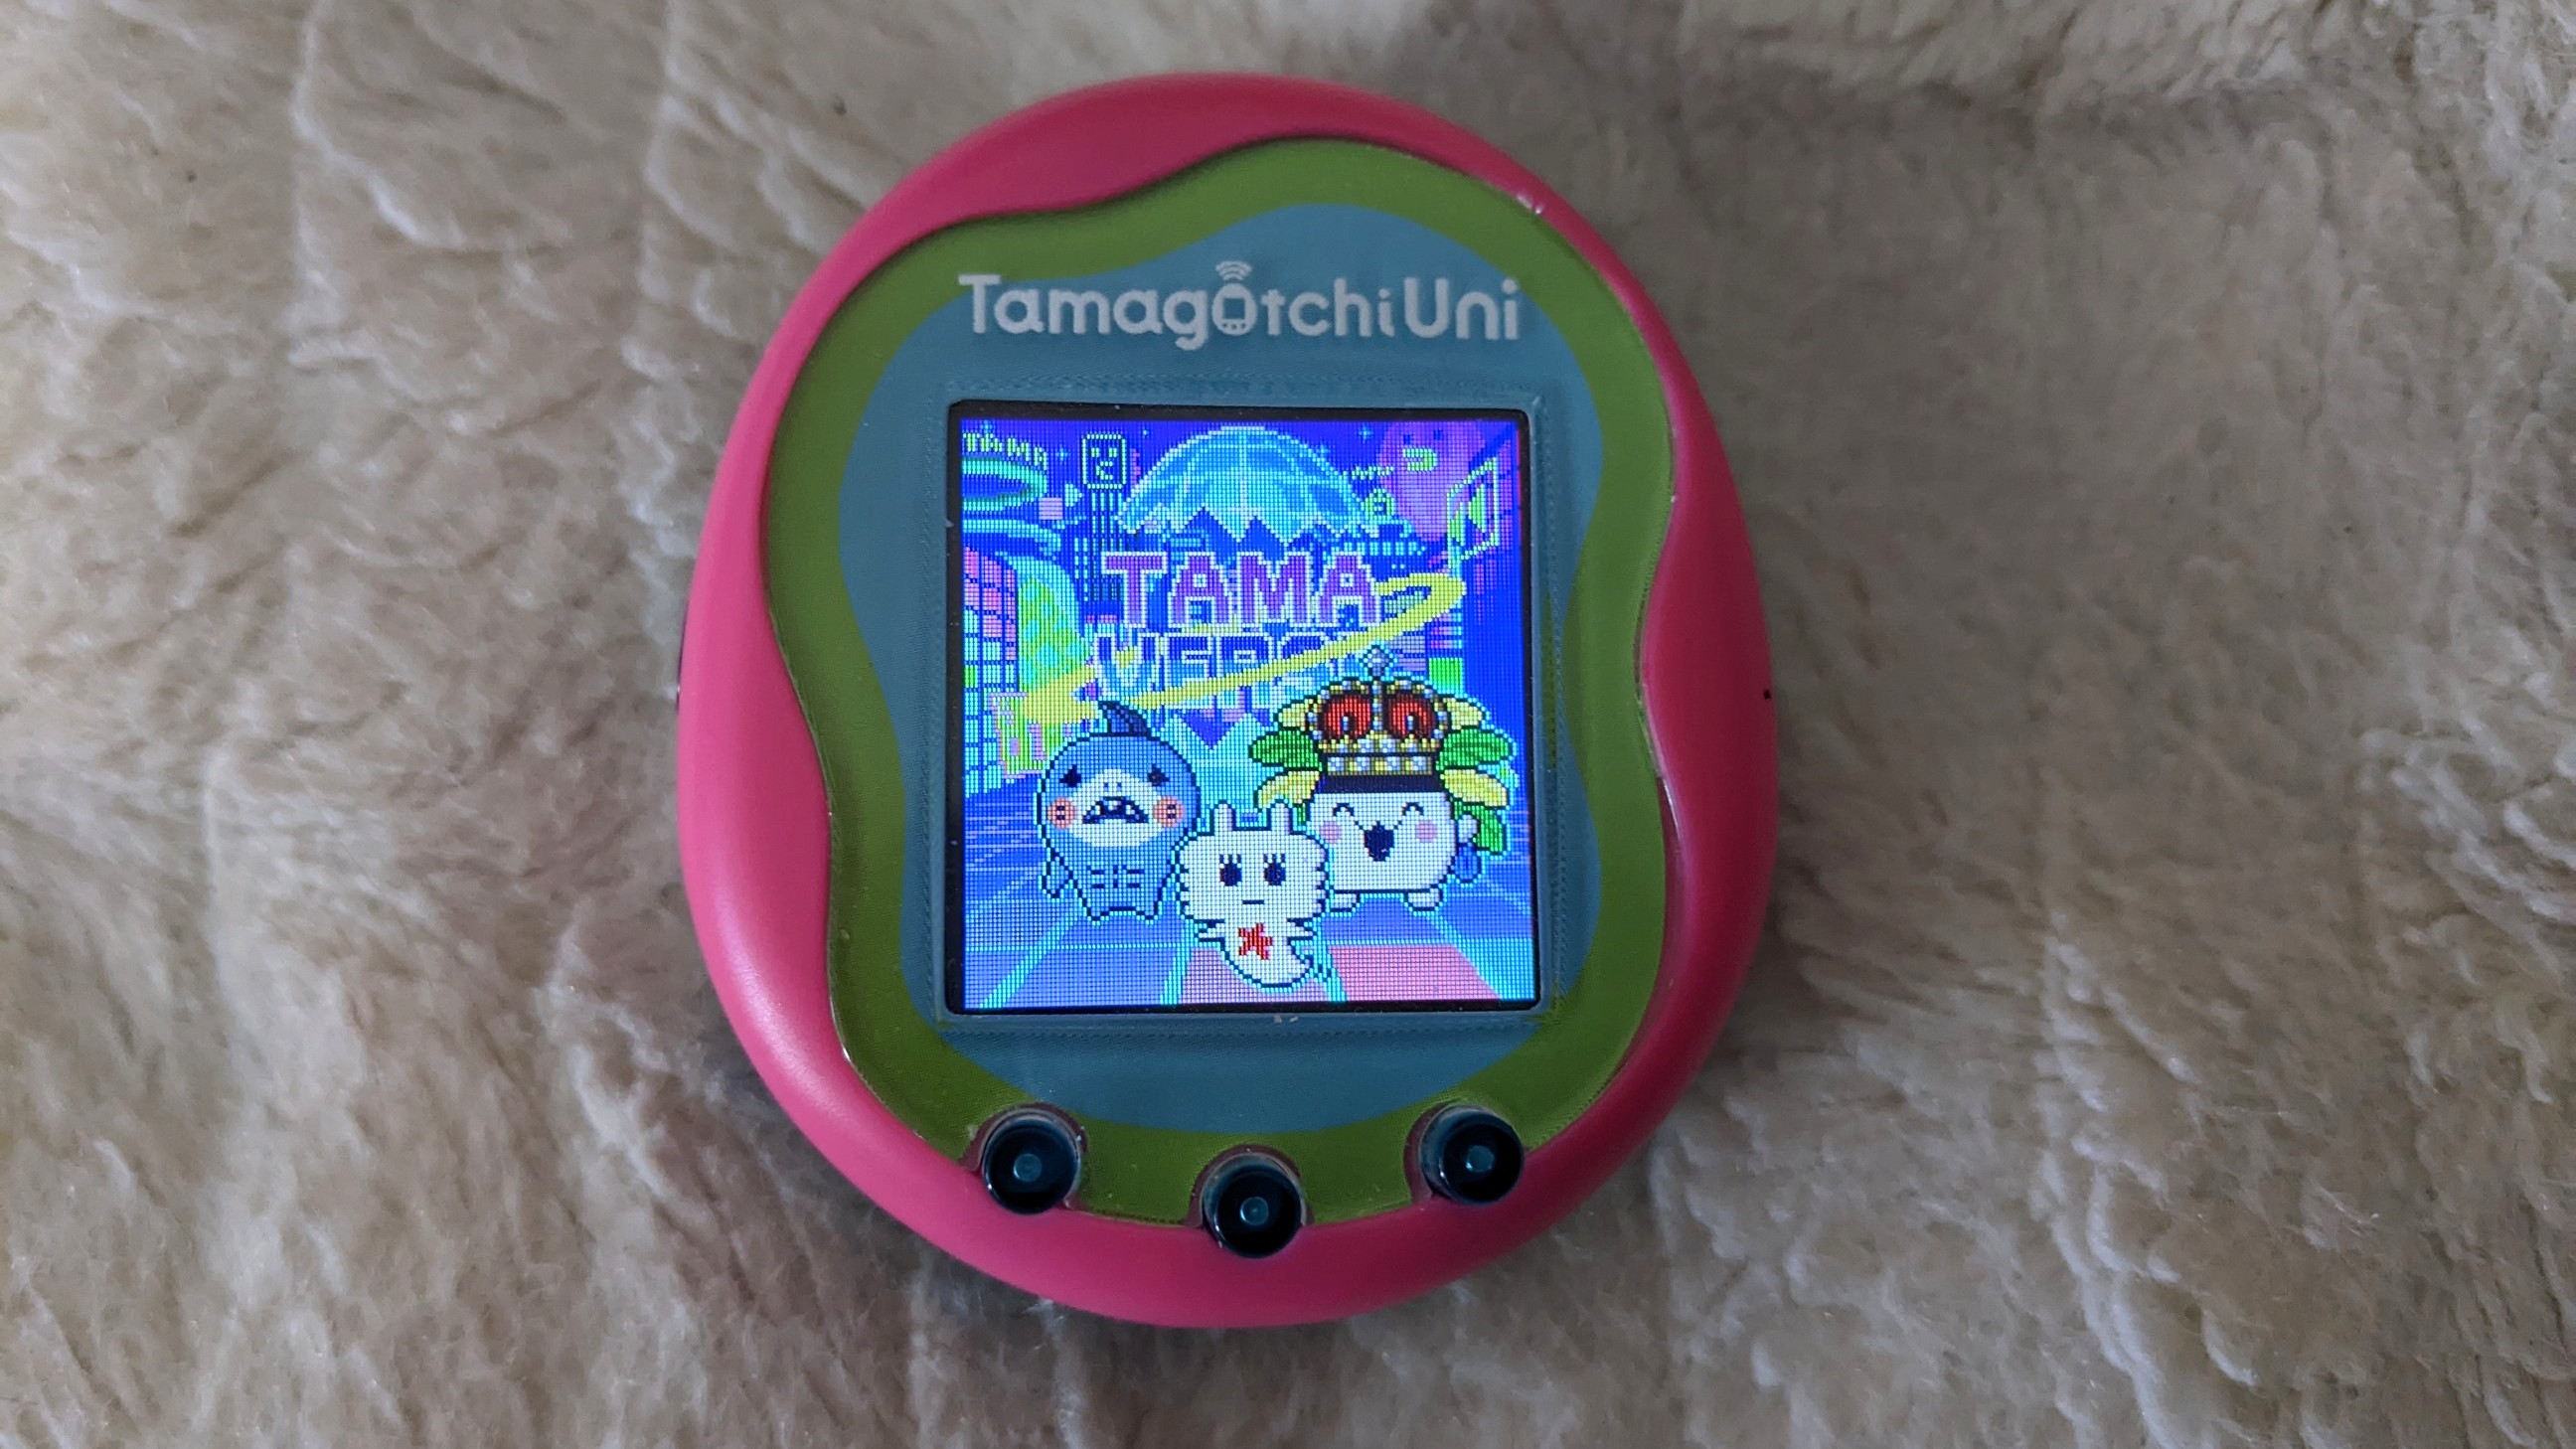 Tamagotchi Uni - Pink